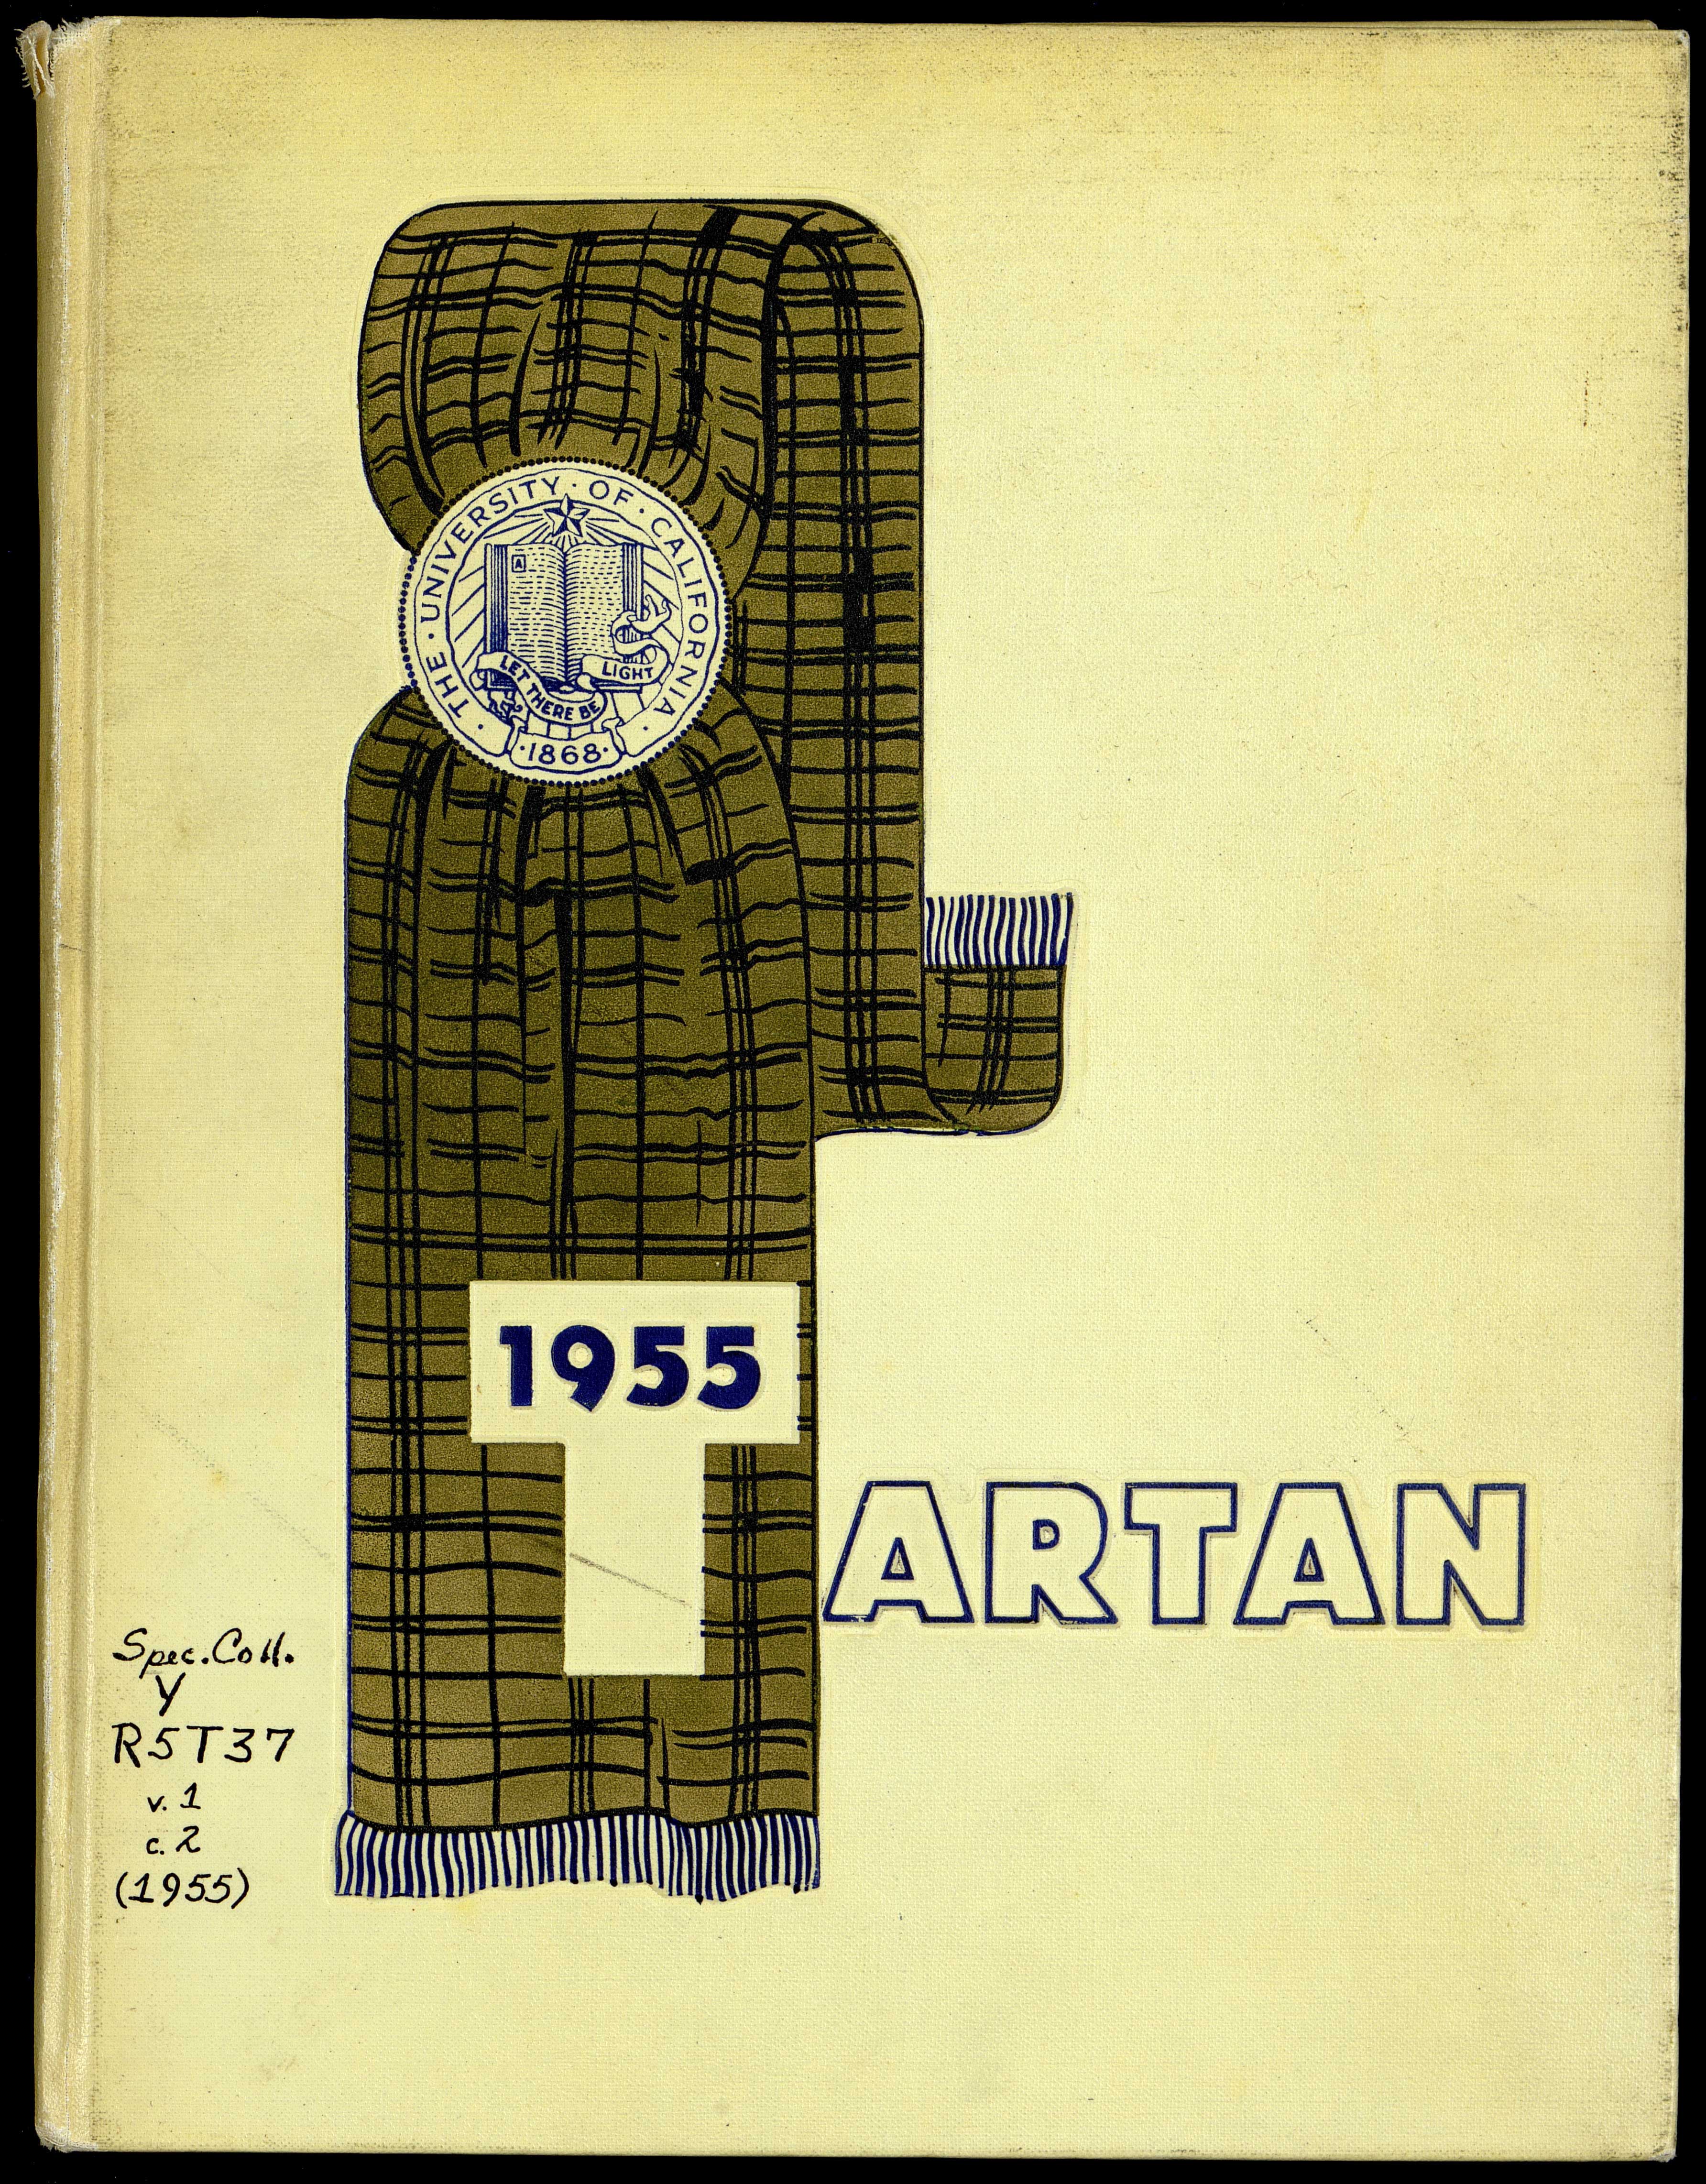 The tartan